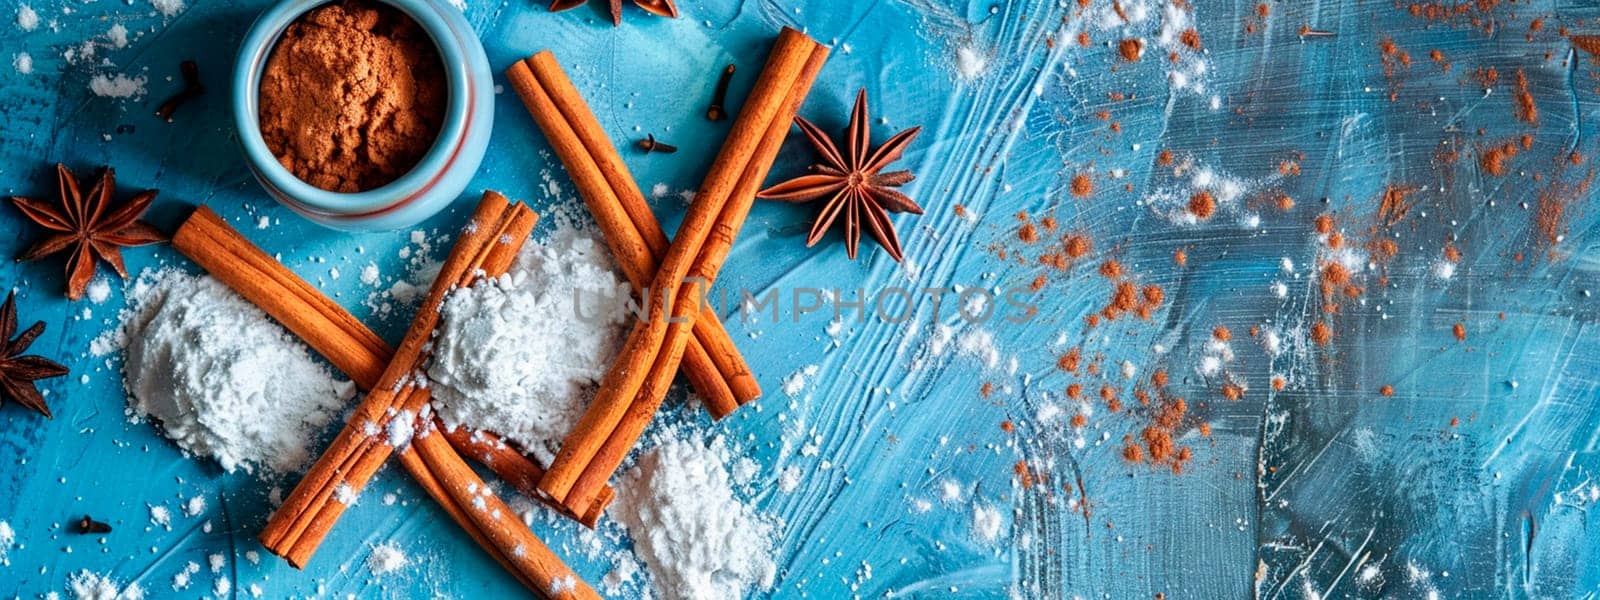 cinnamon flour and anise for baking. Selective focus. by yanadjana